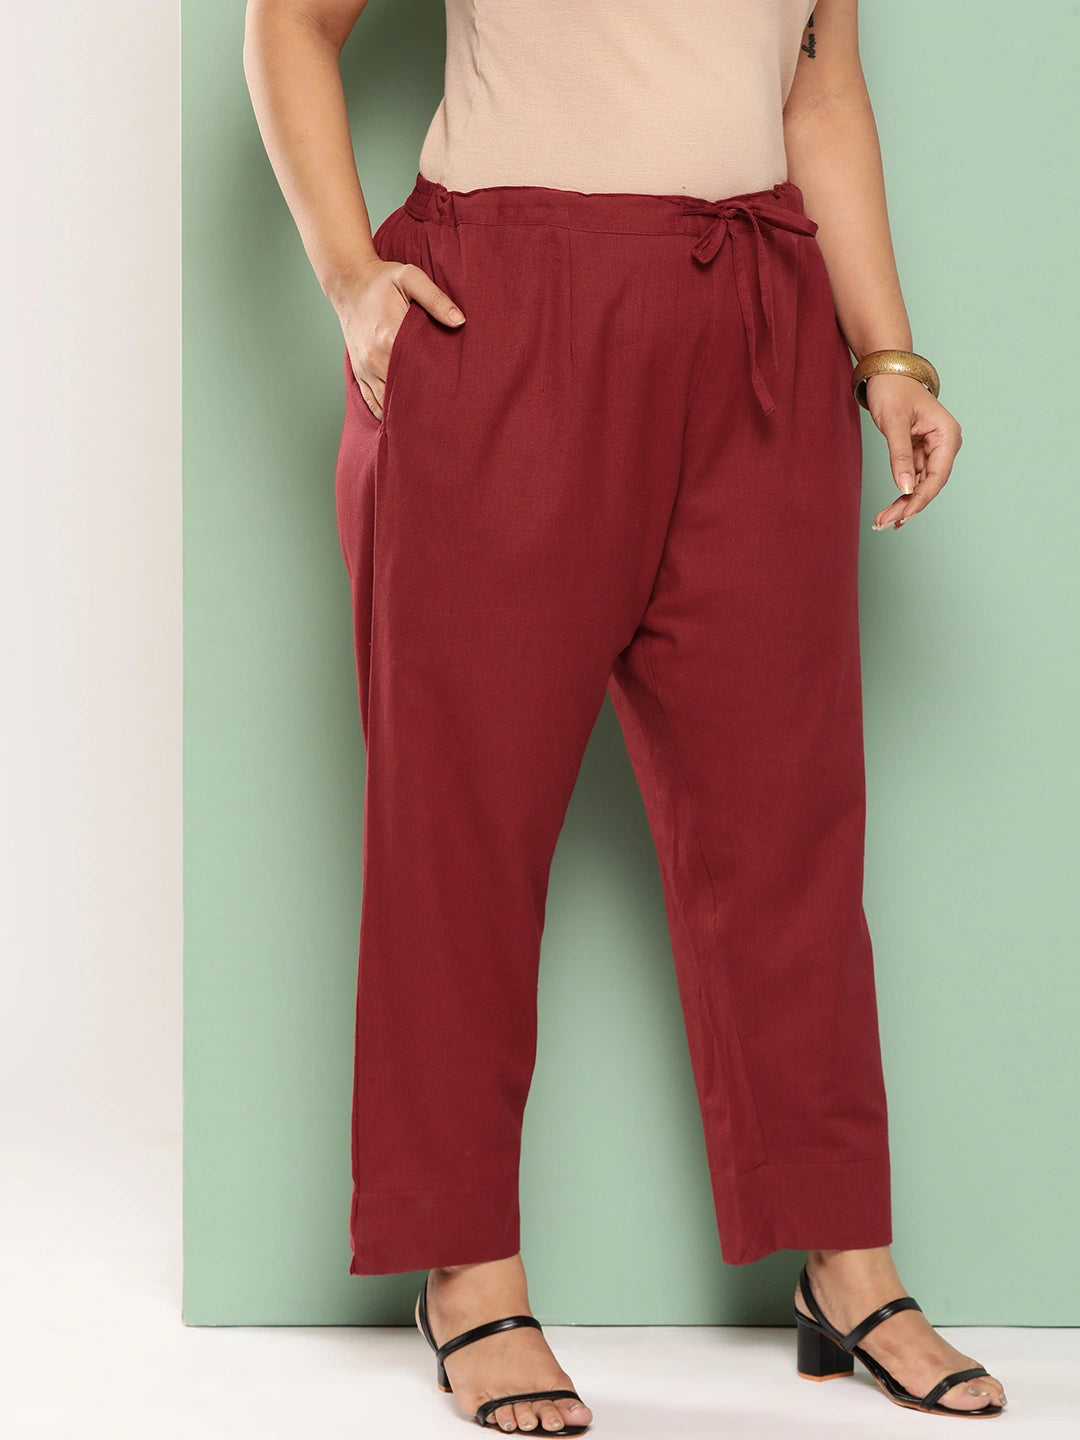 Women Plus Size Maroon Cotton Ethnic Trousers-Yufta Store-4206PPNTMR3XL